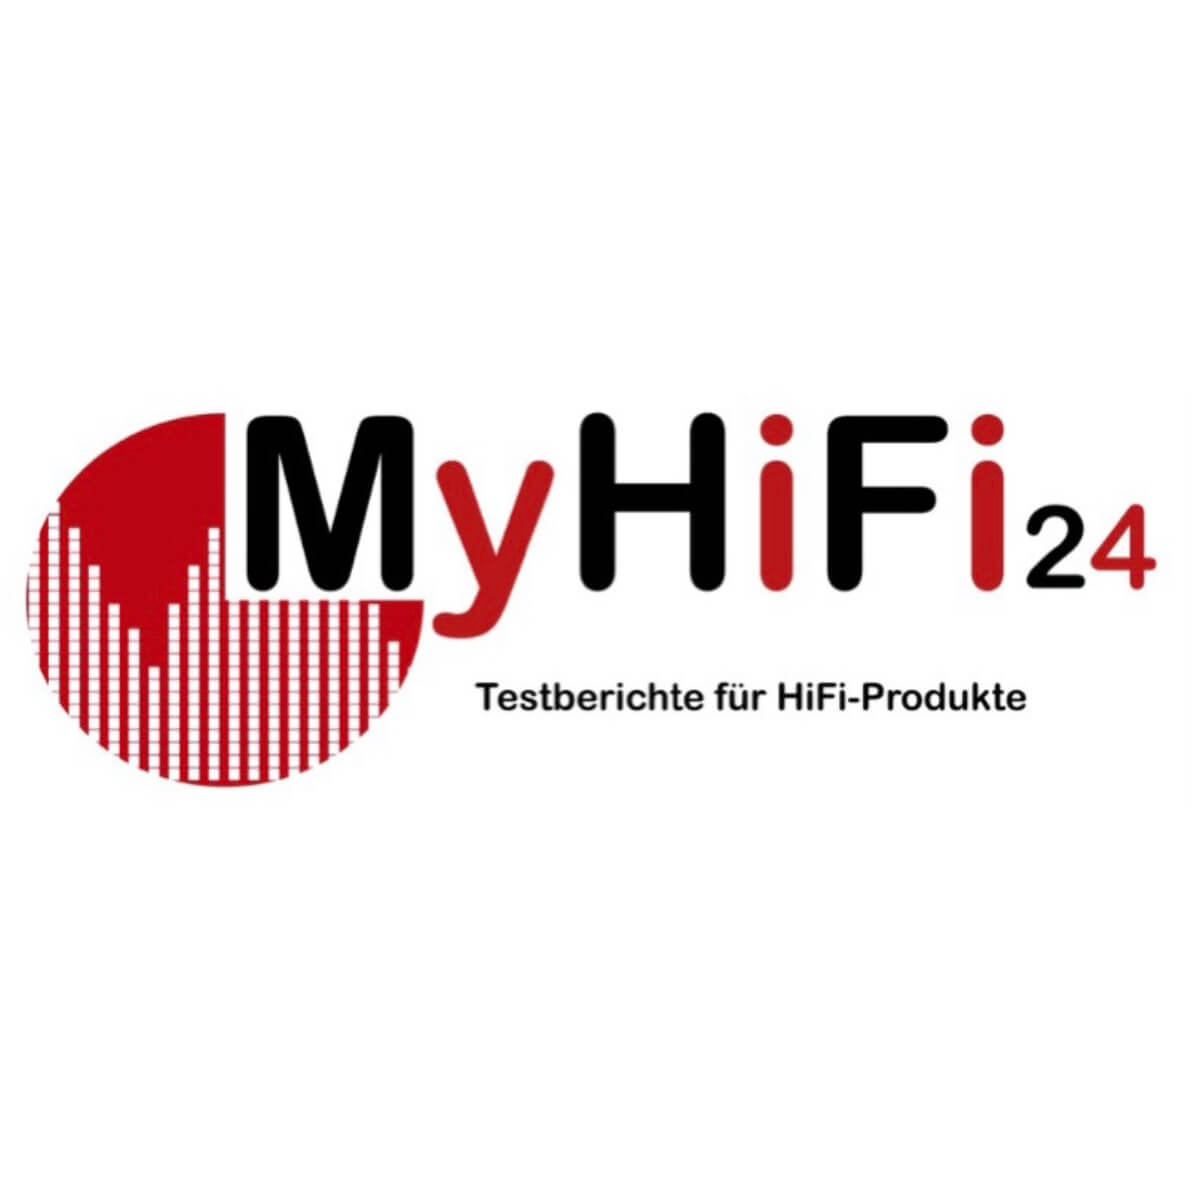 MyHiFi24.com | Testberichte, News über HiFi & Audio Produkte